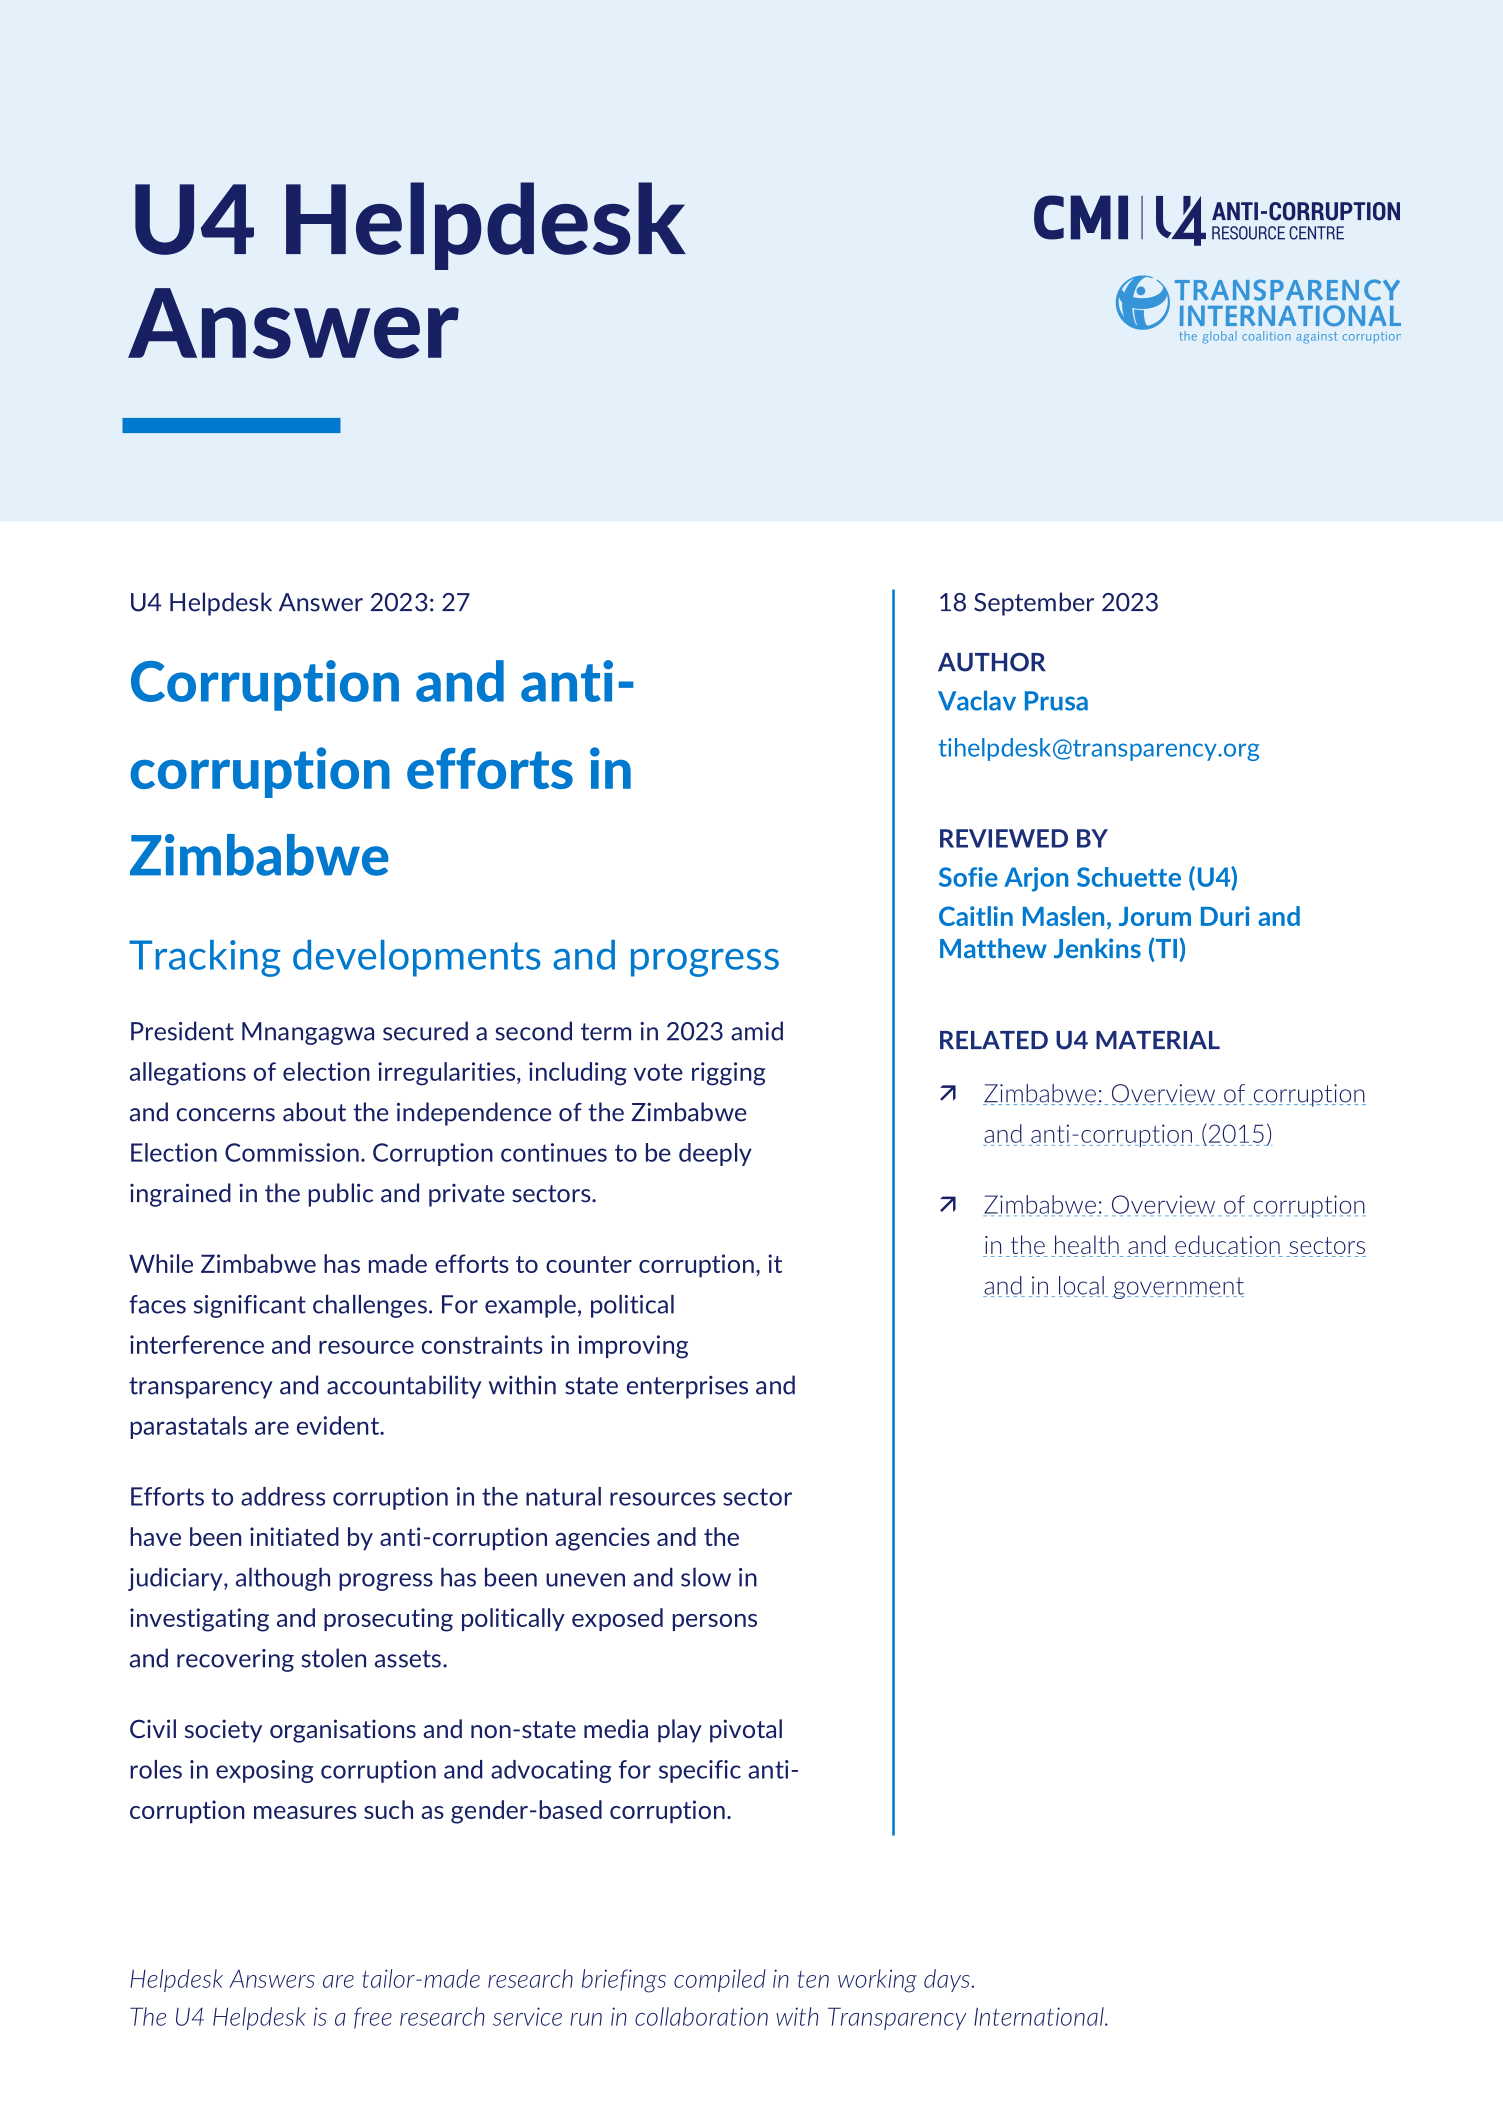 Zimbabwe: Corruption and anti-corruption